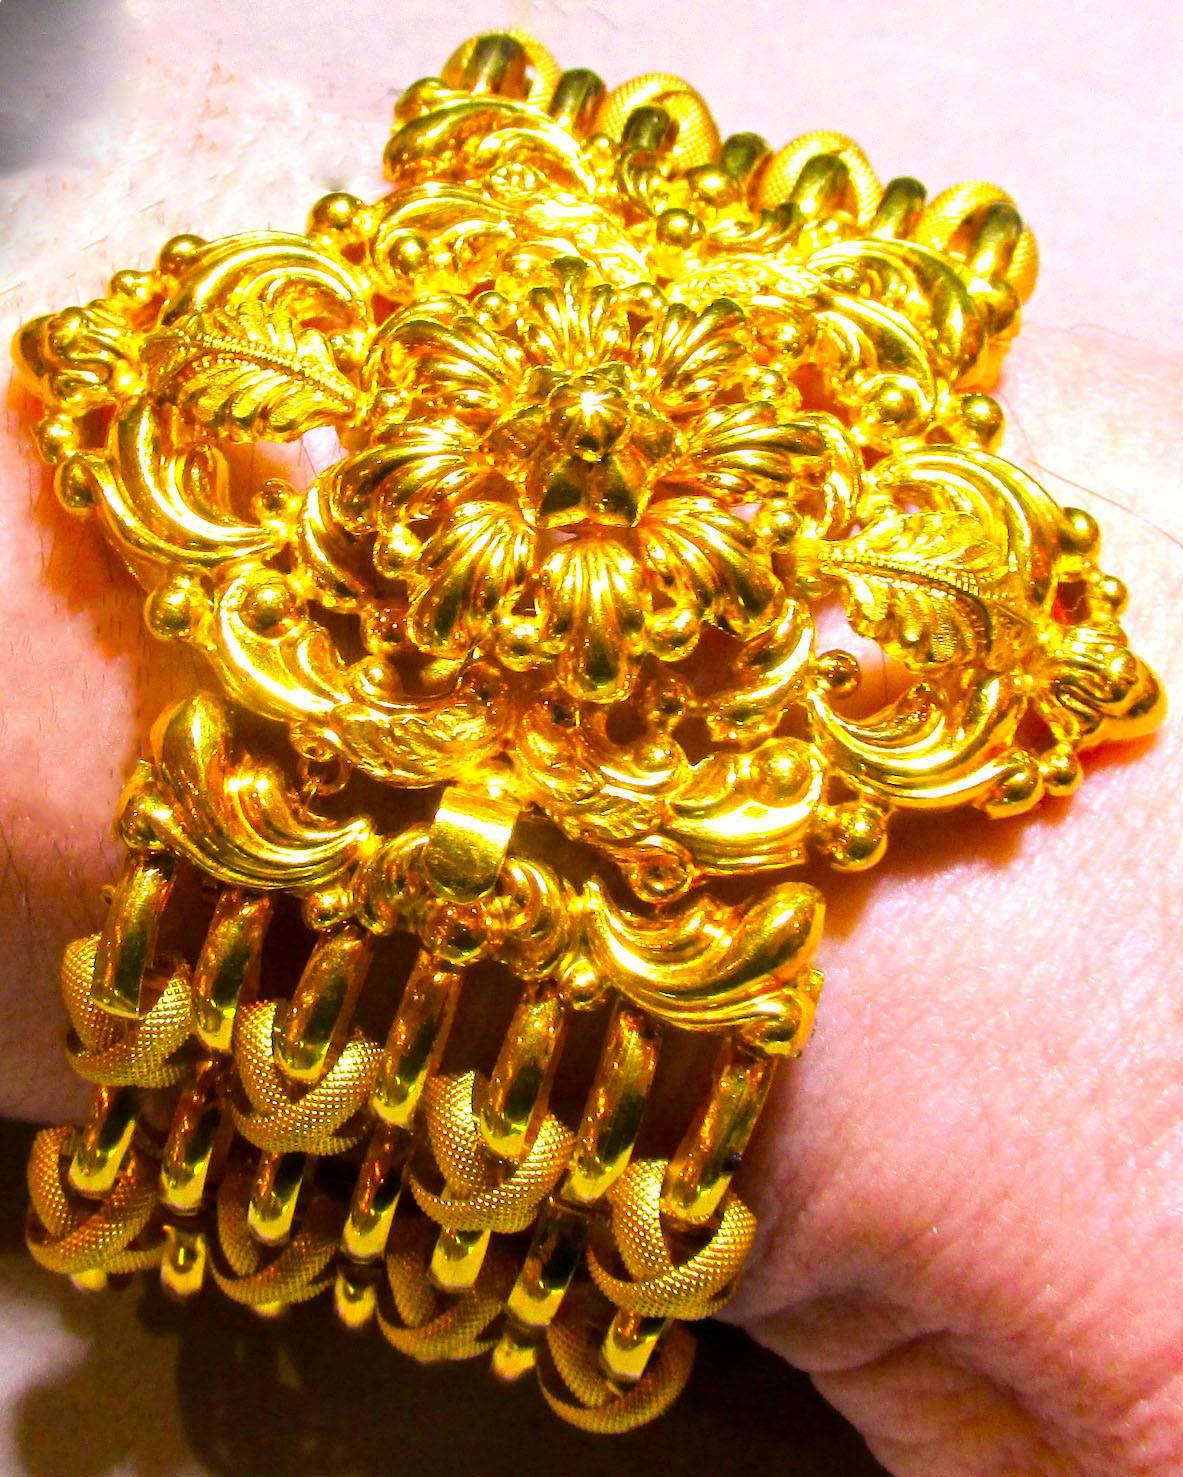 Antique French 18K Gold Cuff Bracelet, c1800bv For Sale 4